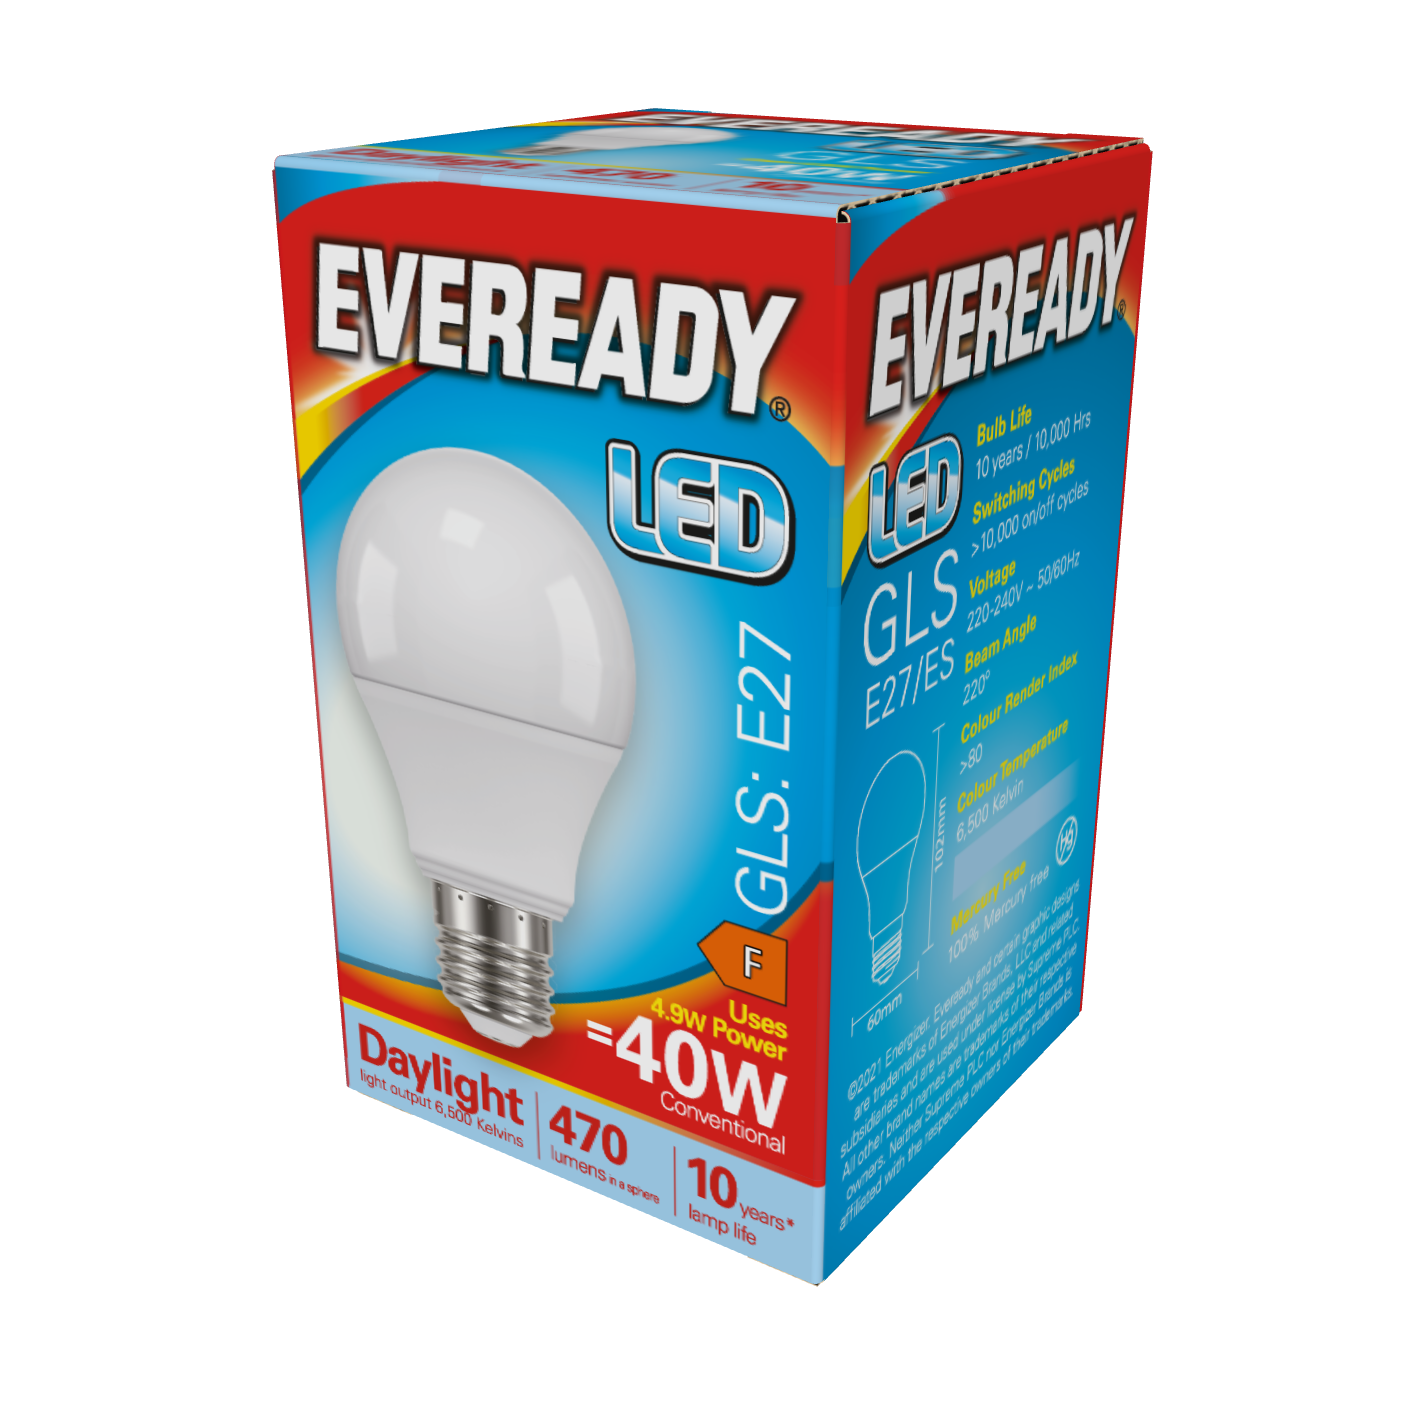 Eveready LED GLS E27 (ES) 470lm 4.9W 6,500K (Daylight), Box of 1